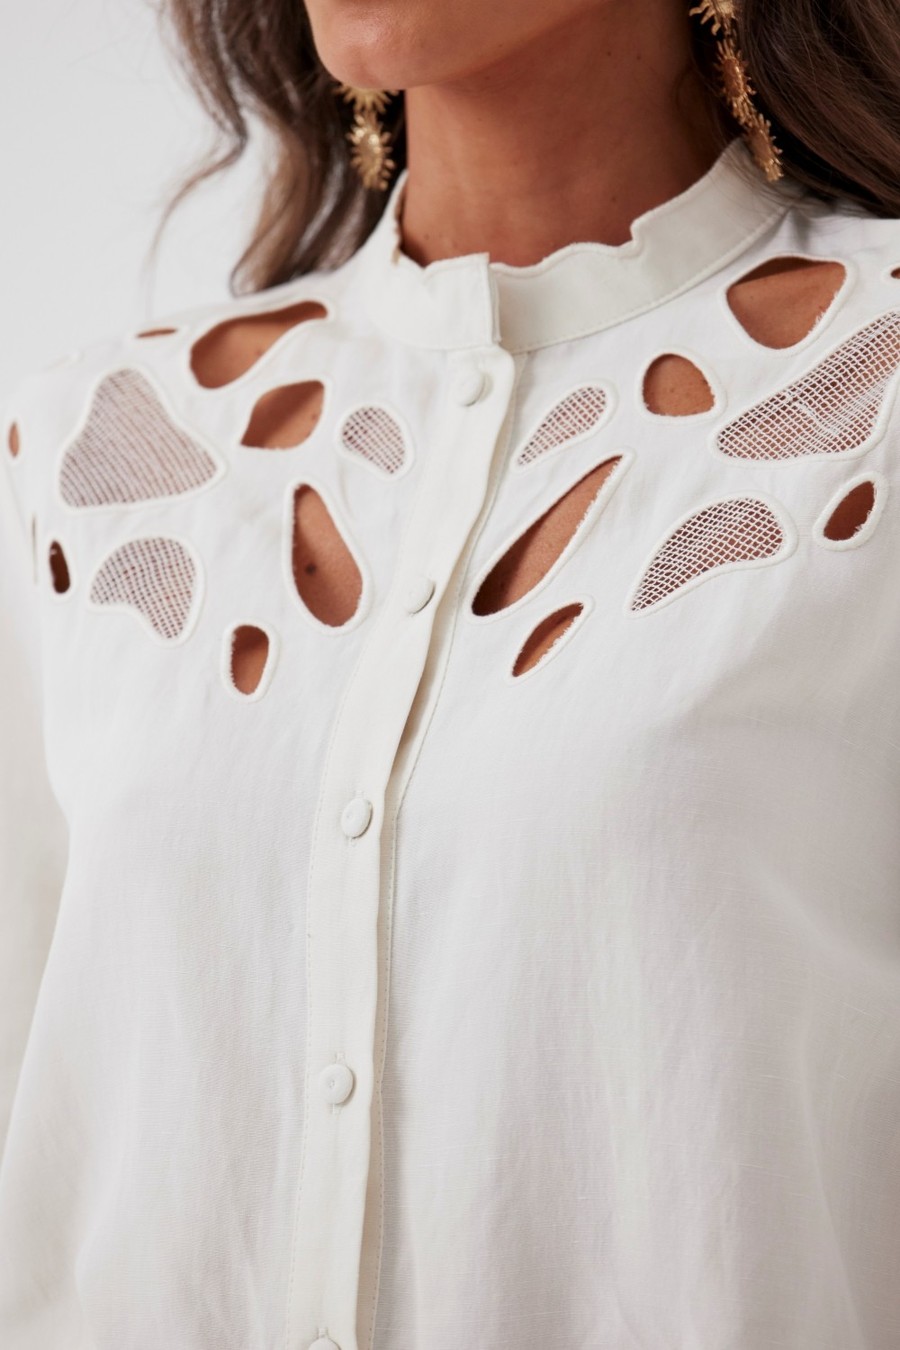 camisa linho bordado off white agata 0031 oásis resortwear